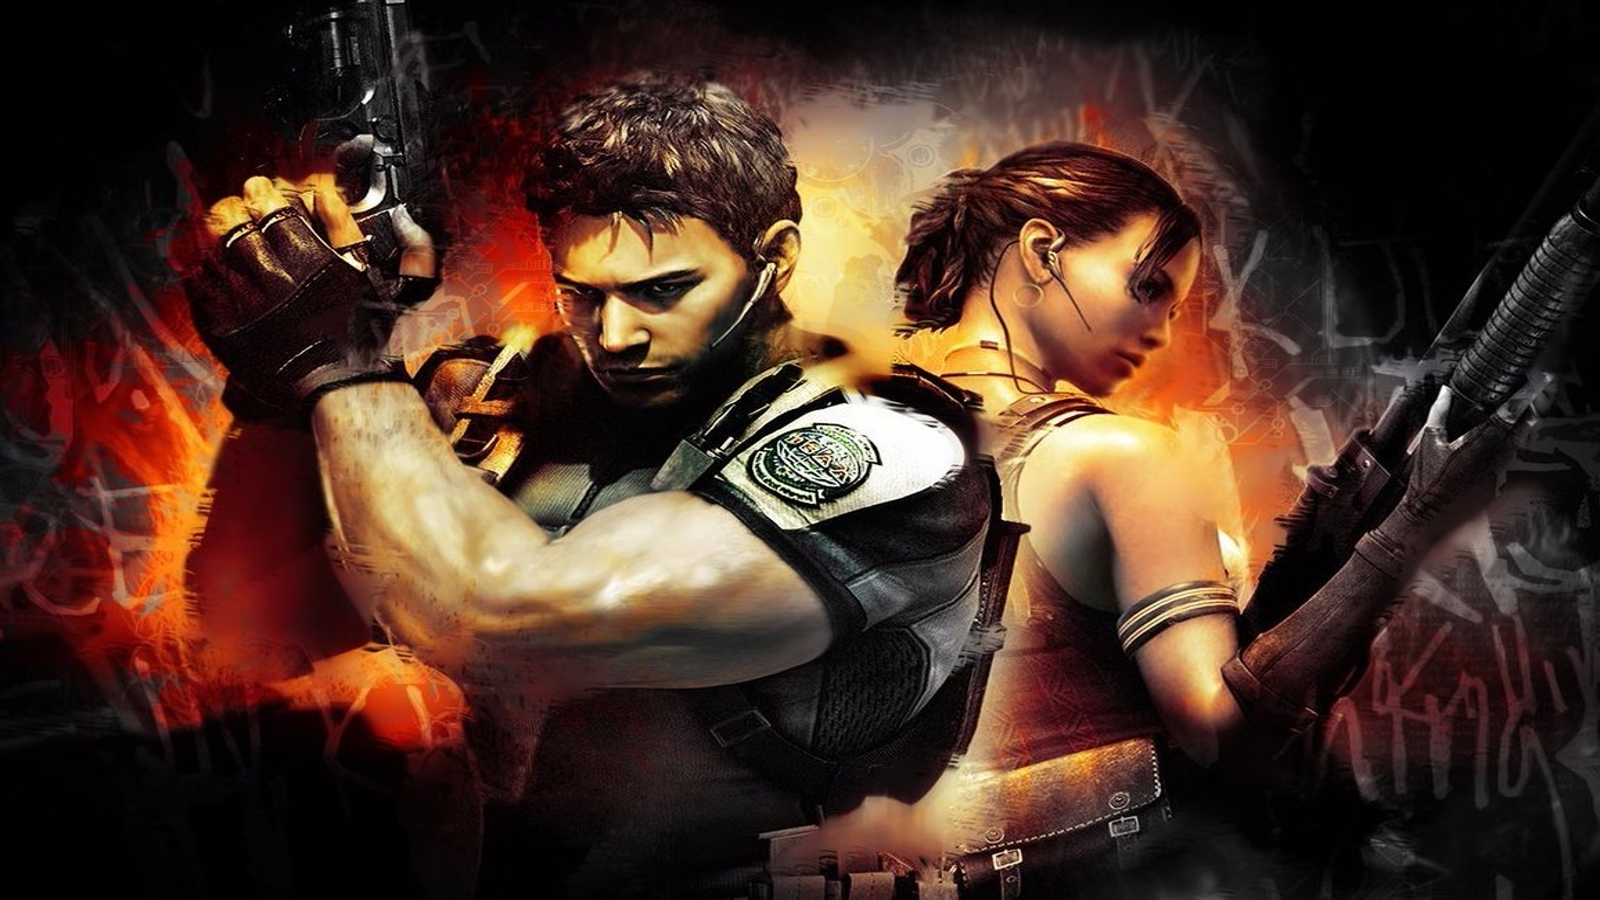 Resident Evil 5 png images